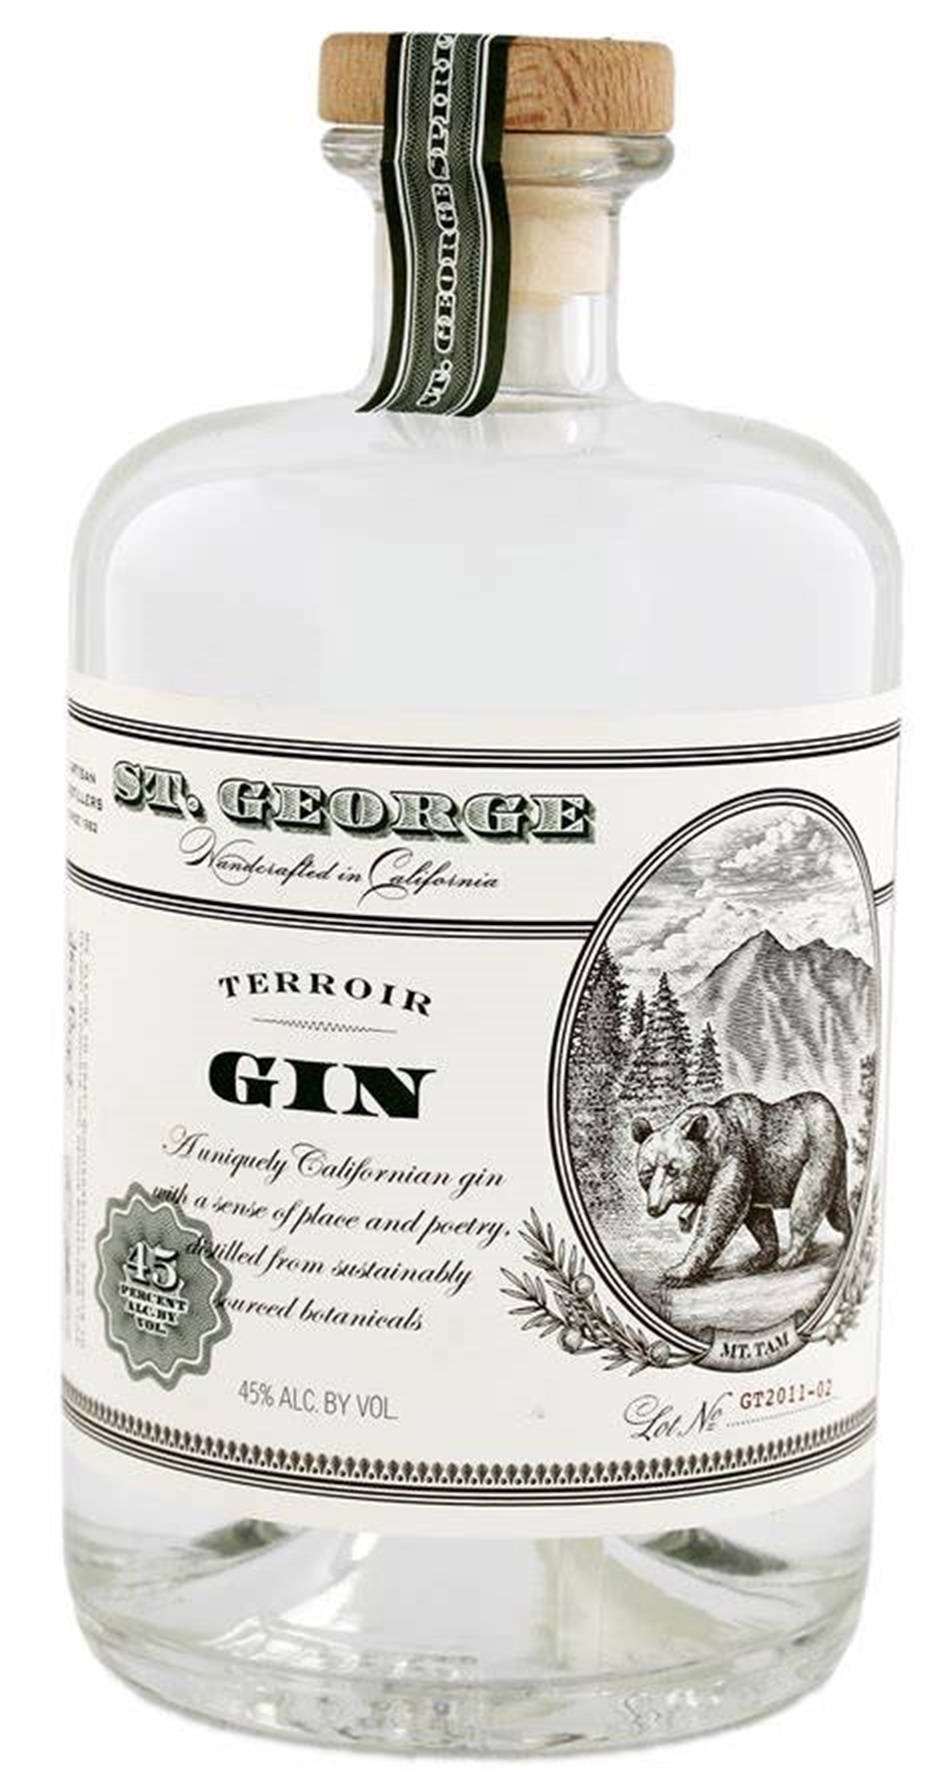 St. George Terroir Gin Label Illustration Wallpaper